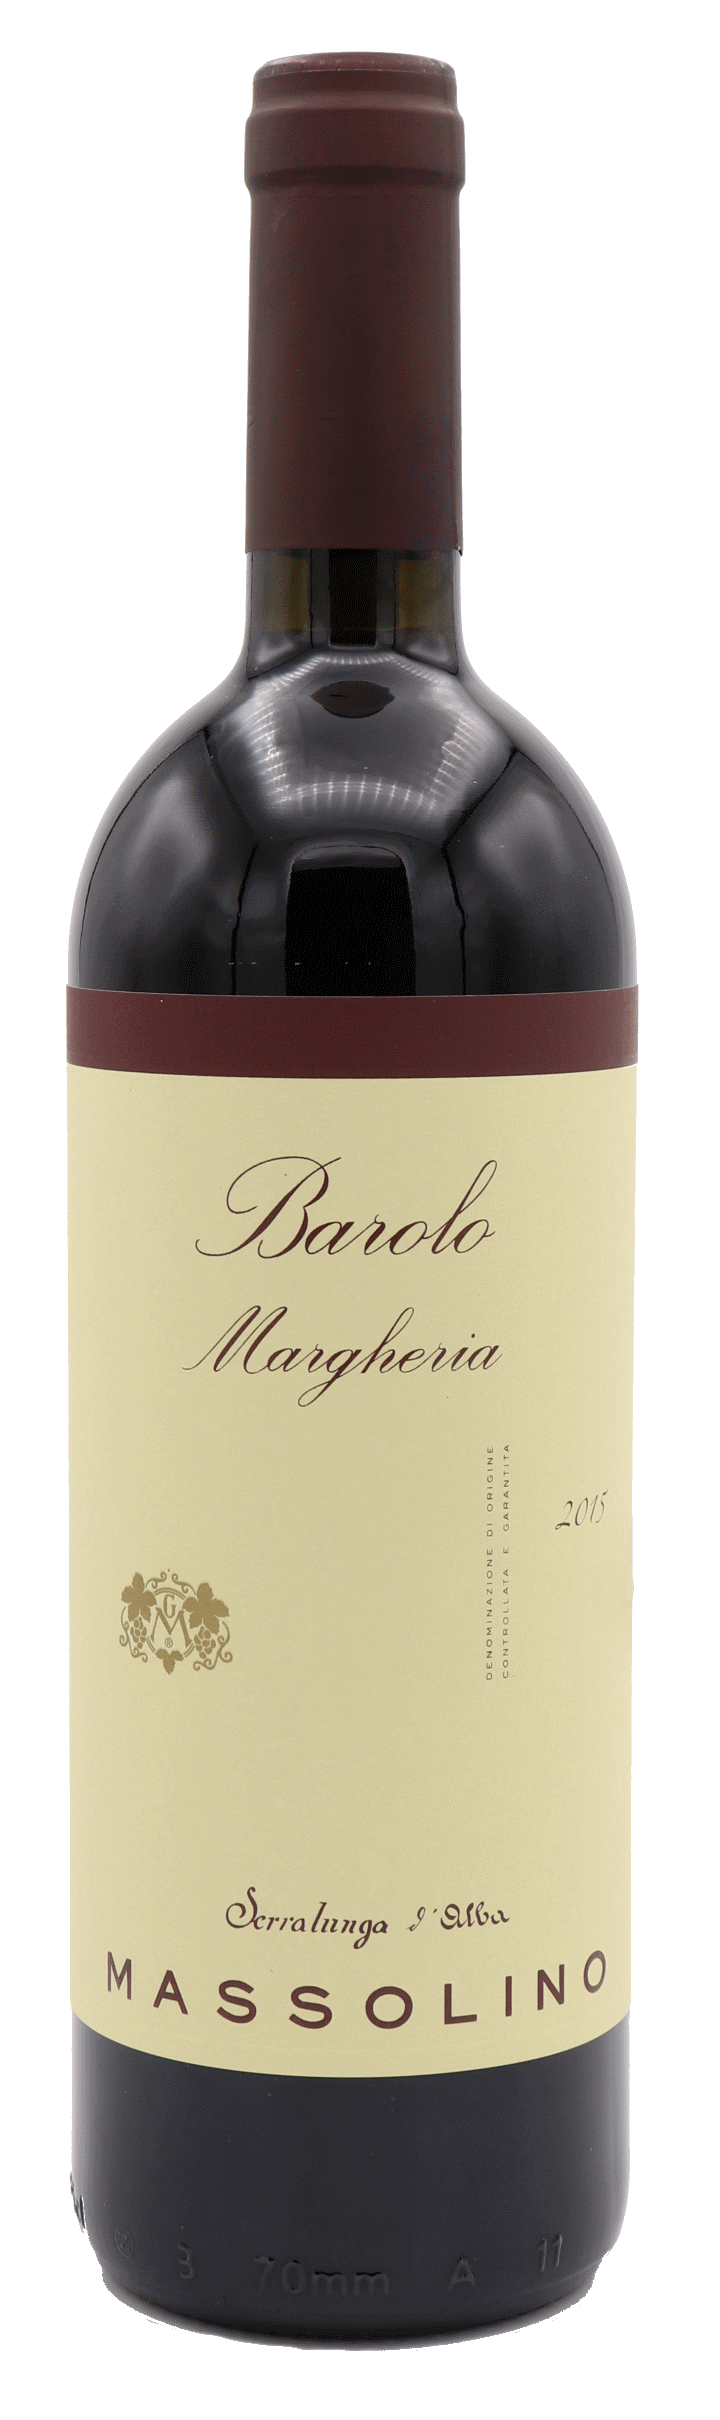 Massolino - Barolo Margheria 2015